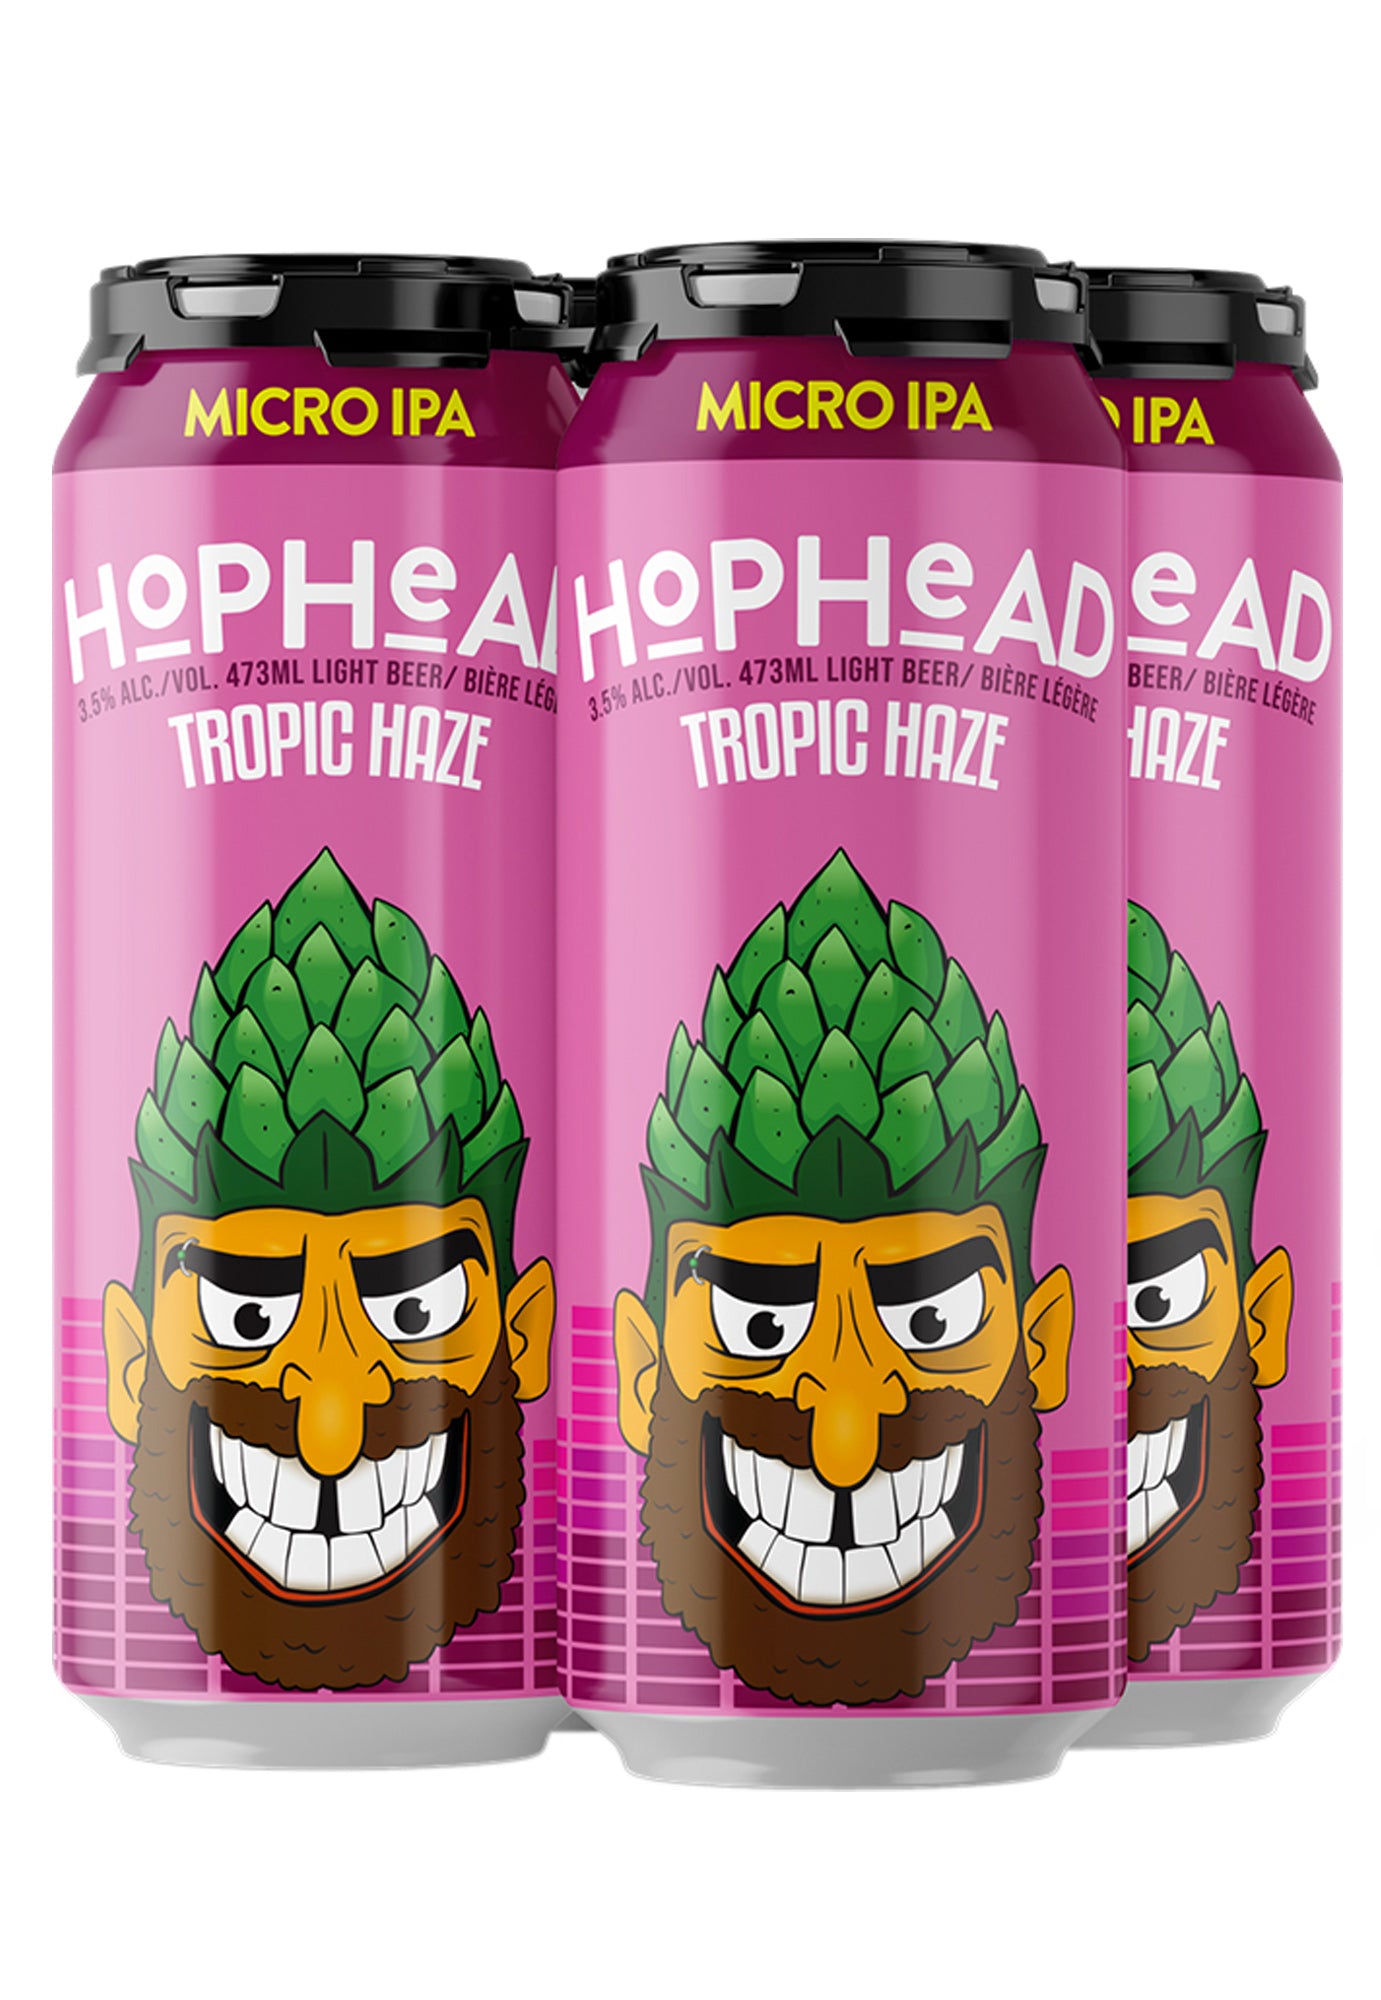 Hop Head Tropic Haze Micro IPA 473 ml - 4 Cans